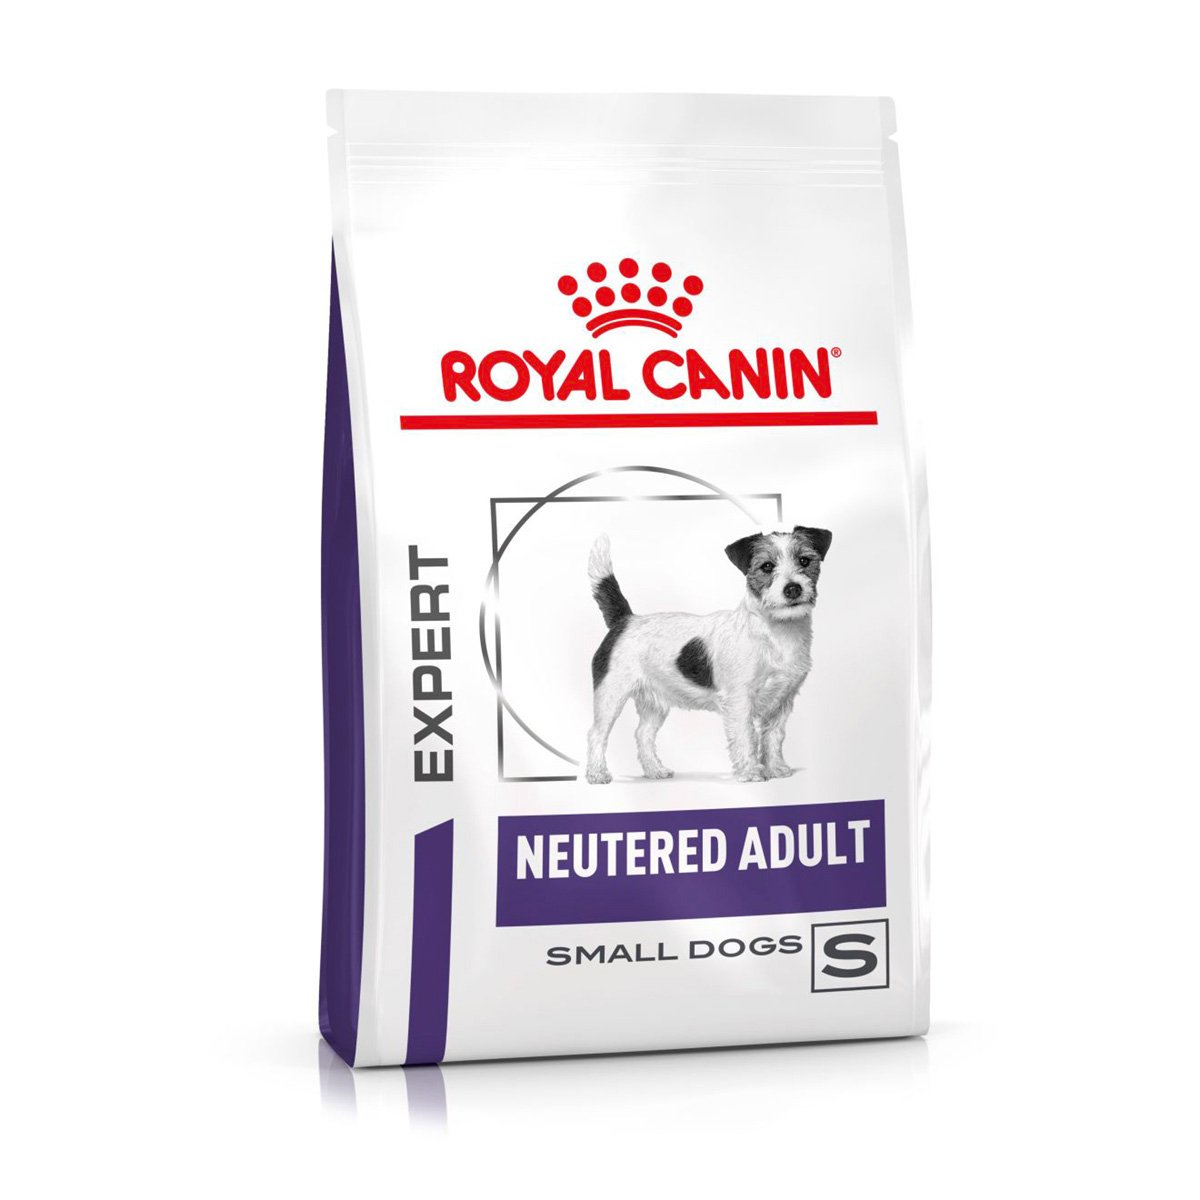 ROYAL CANIN® Expert NEUTERED ADULT SMALL DOGS Trockenfutter für Hunde 8kg von Royal Canin